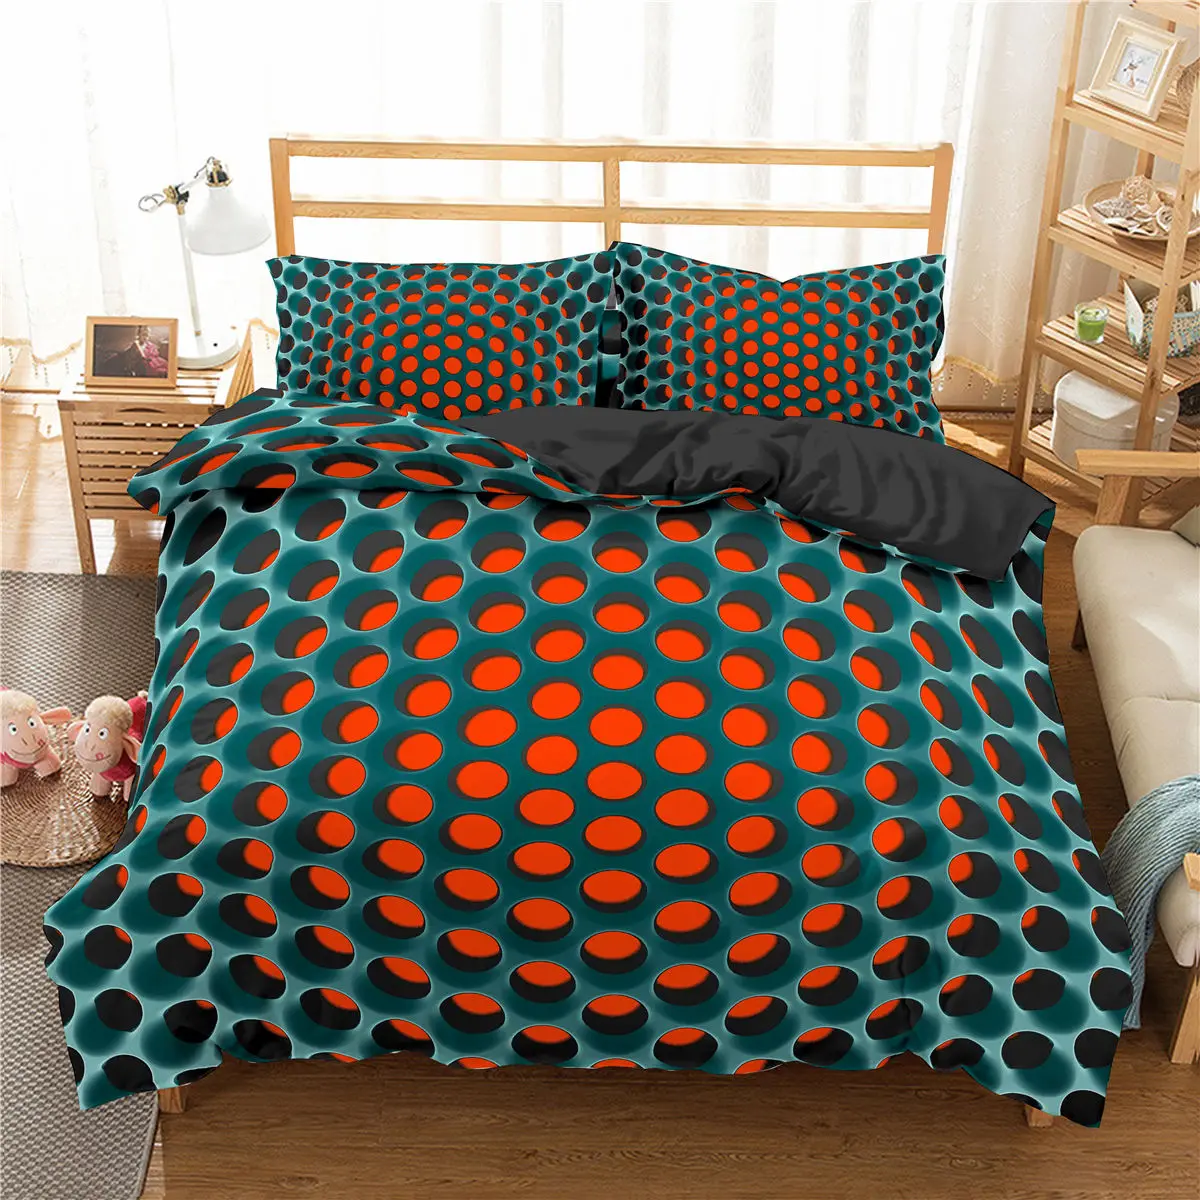 Home Textiles Luxury 3D Dot Art Duvet Cover Set Pillowcase 2/3 Pcs Kids Bedding Set AU/EU/UK/US Queen and King Size Bedding